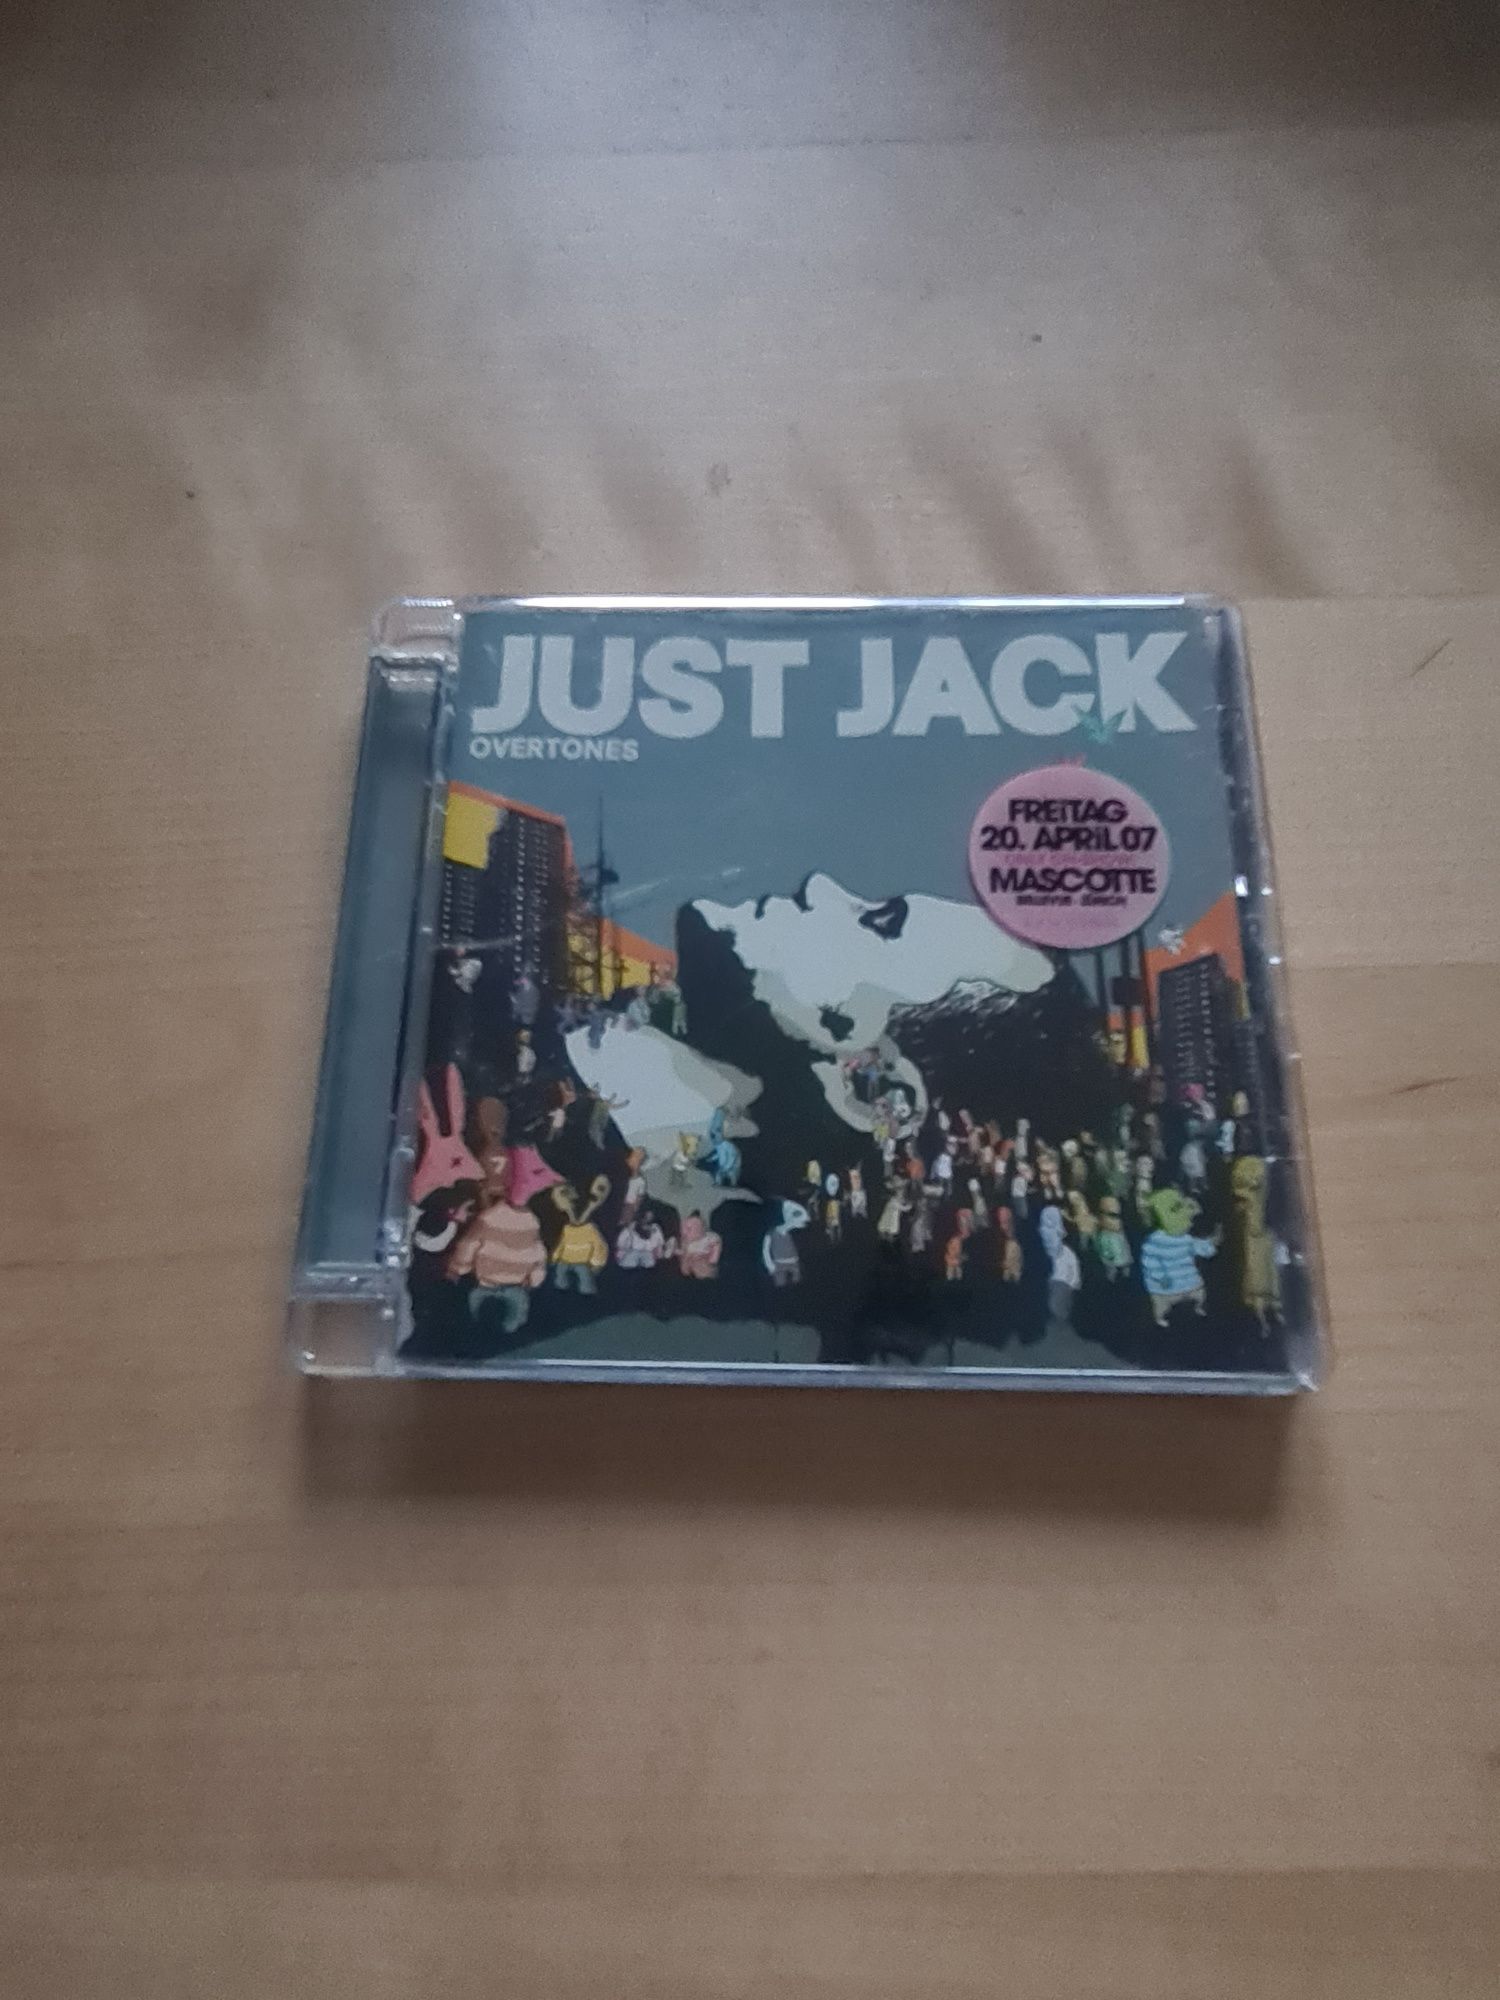 Płyta CD Just Jack - Overtones